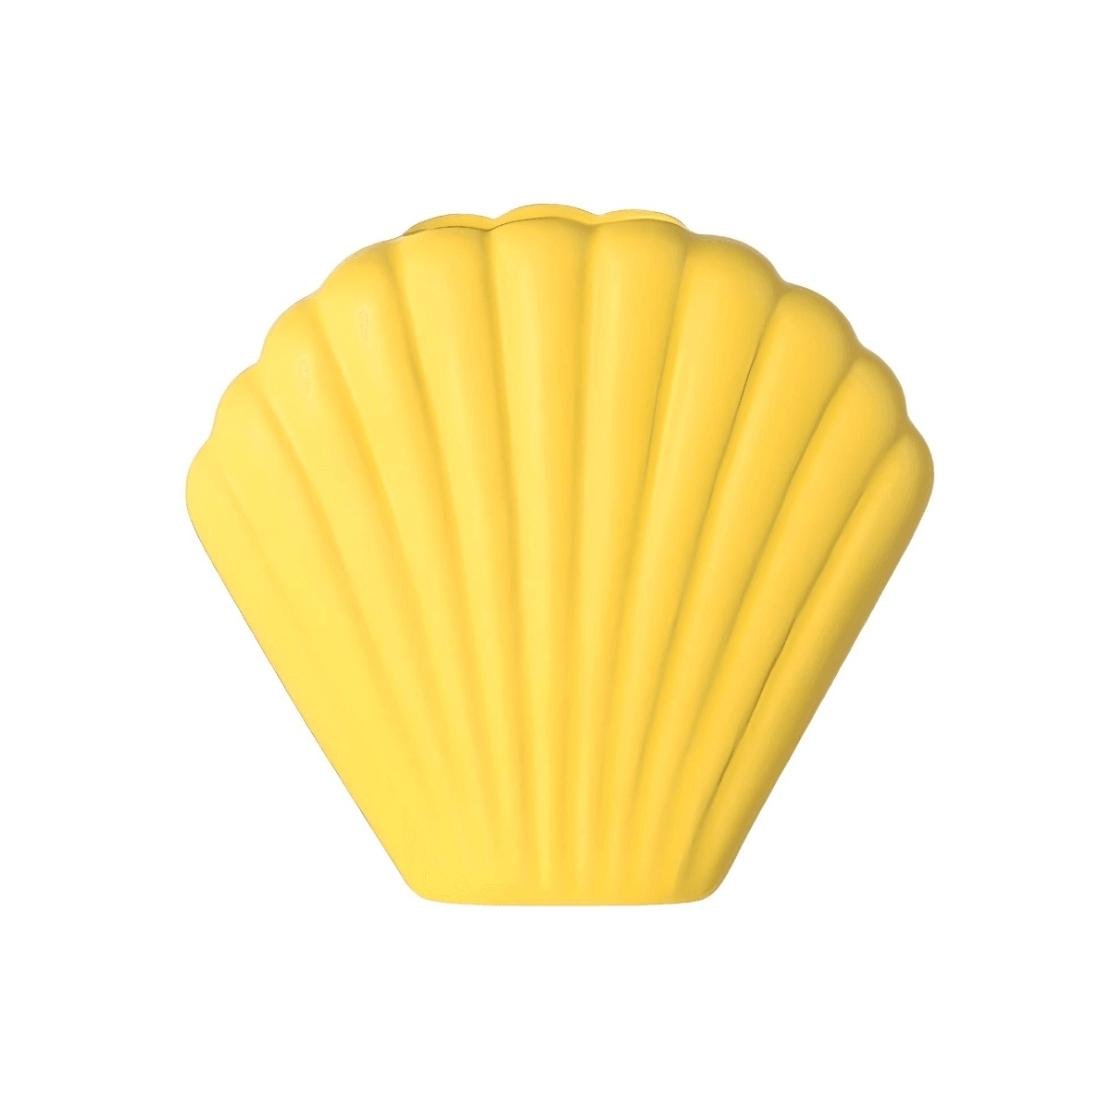 Yellow ceramic shell vase